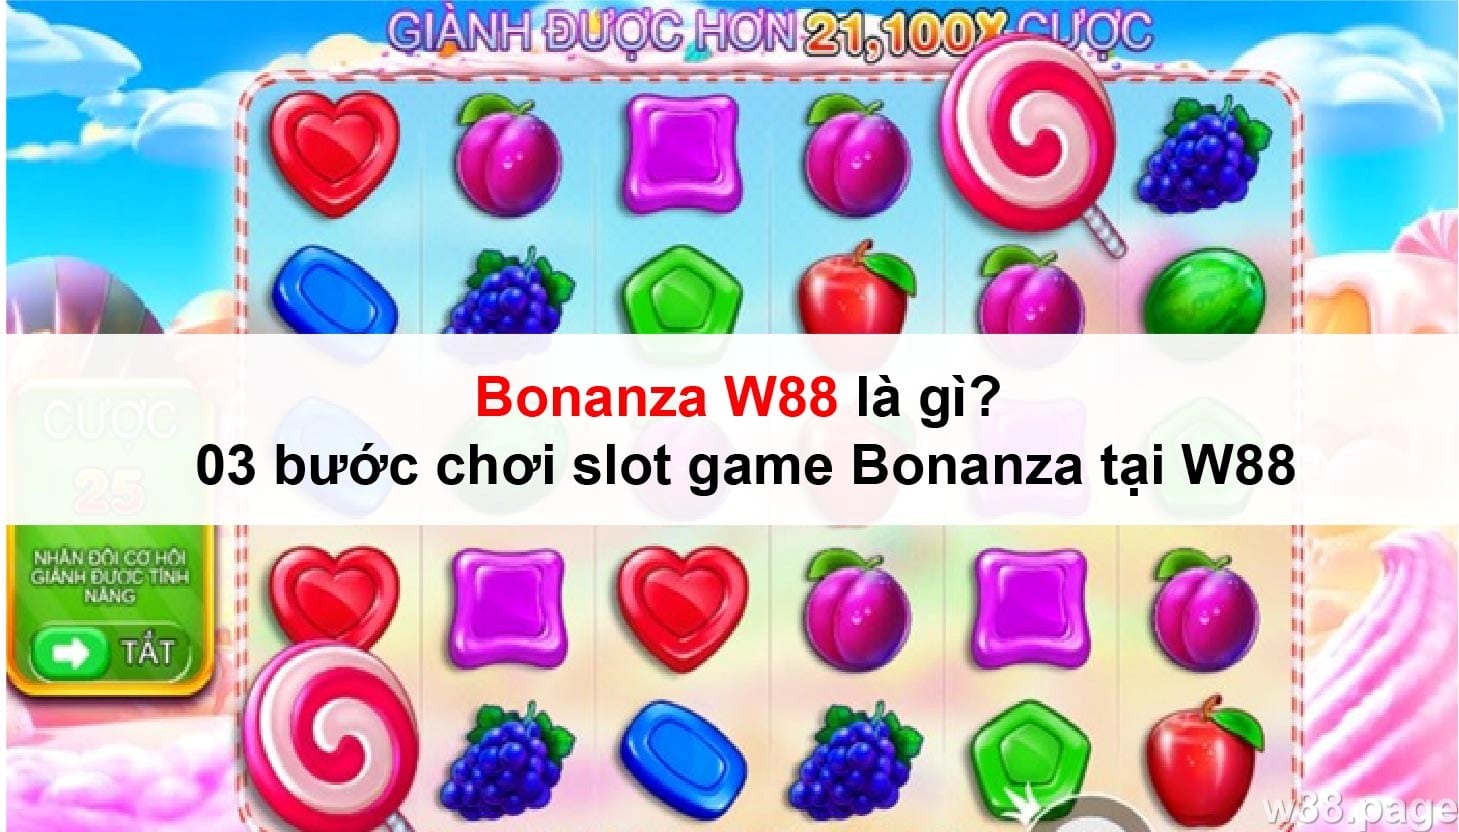 Bonanza W88 là gì? 03 bước chơi slot game Bonanza tại W88 6